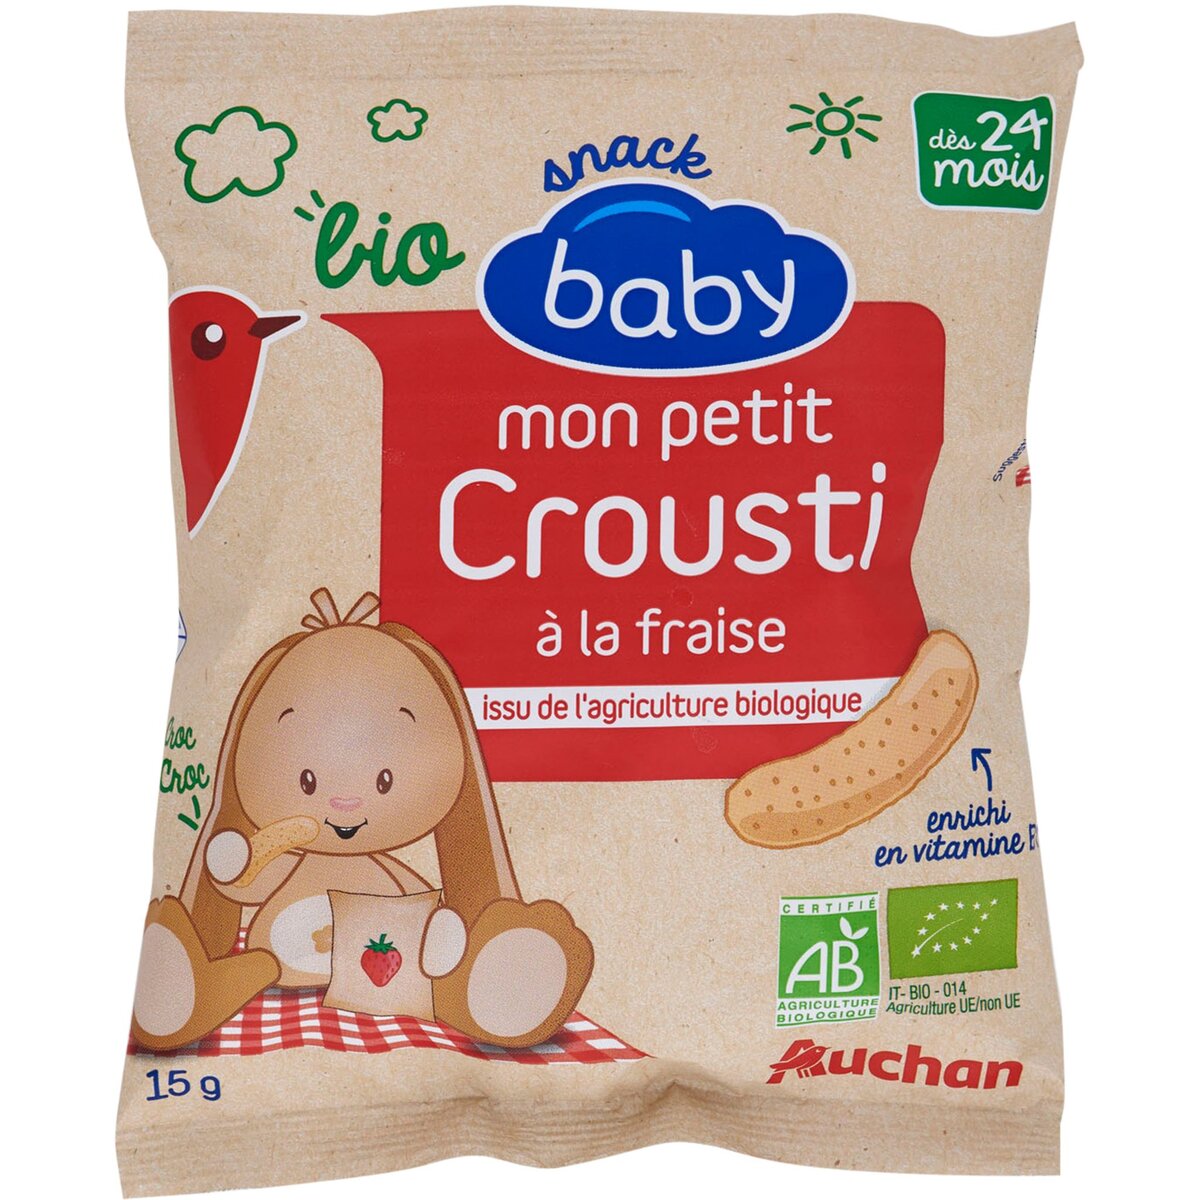 AUCHAN BABY BIO Auchan baby bio Snack mon petit crousti à la fraise dès 24 mois 15g 15g